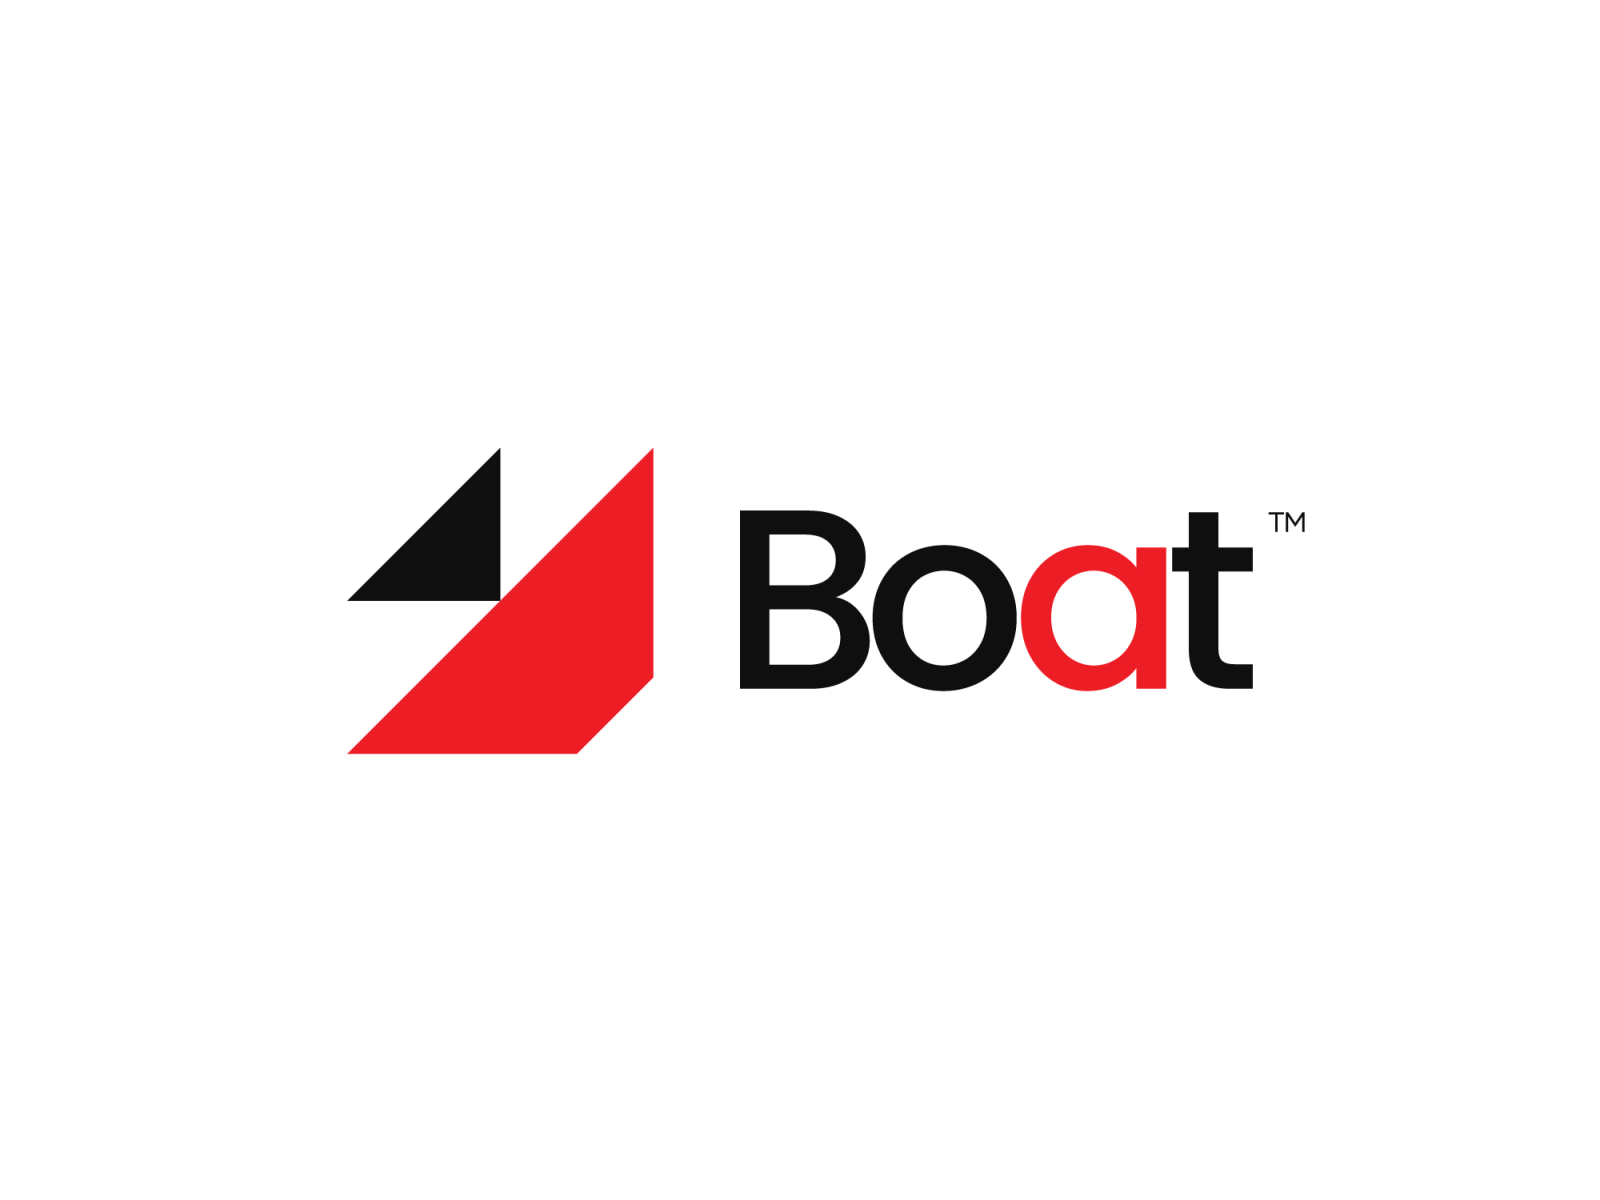 Boat - Electronics Brand Logo Design by Saiduzzaman Khondhoker on